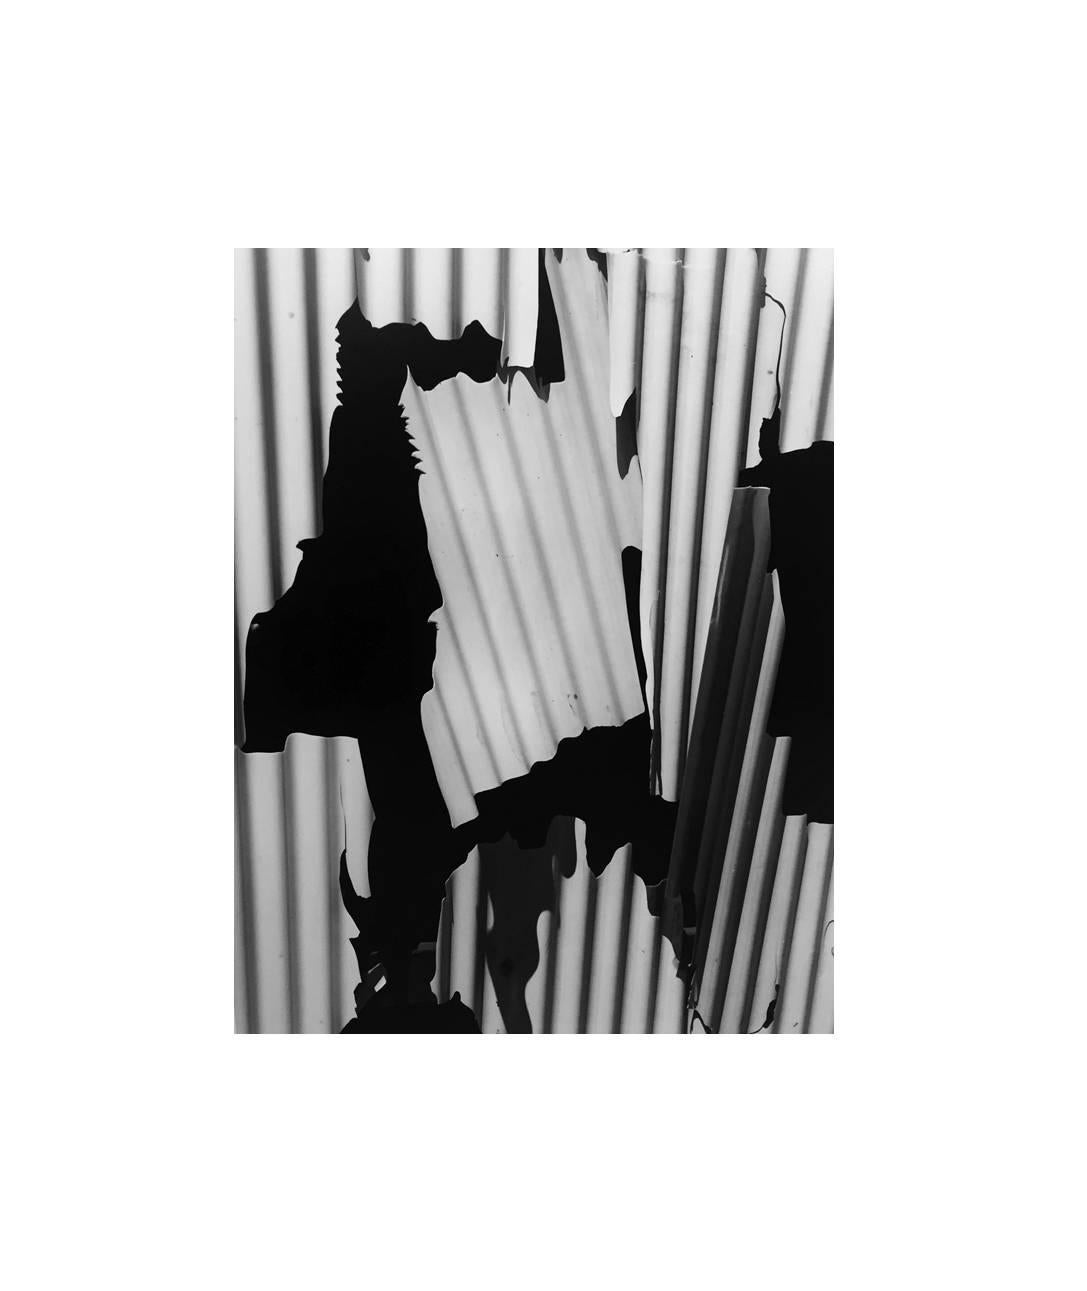 Brett Weston Black and White Photograph - Broken Plastic, 1973